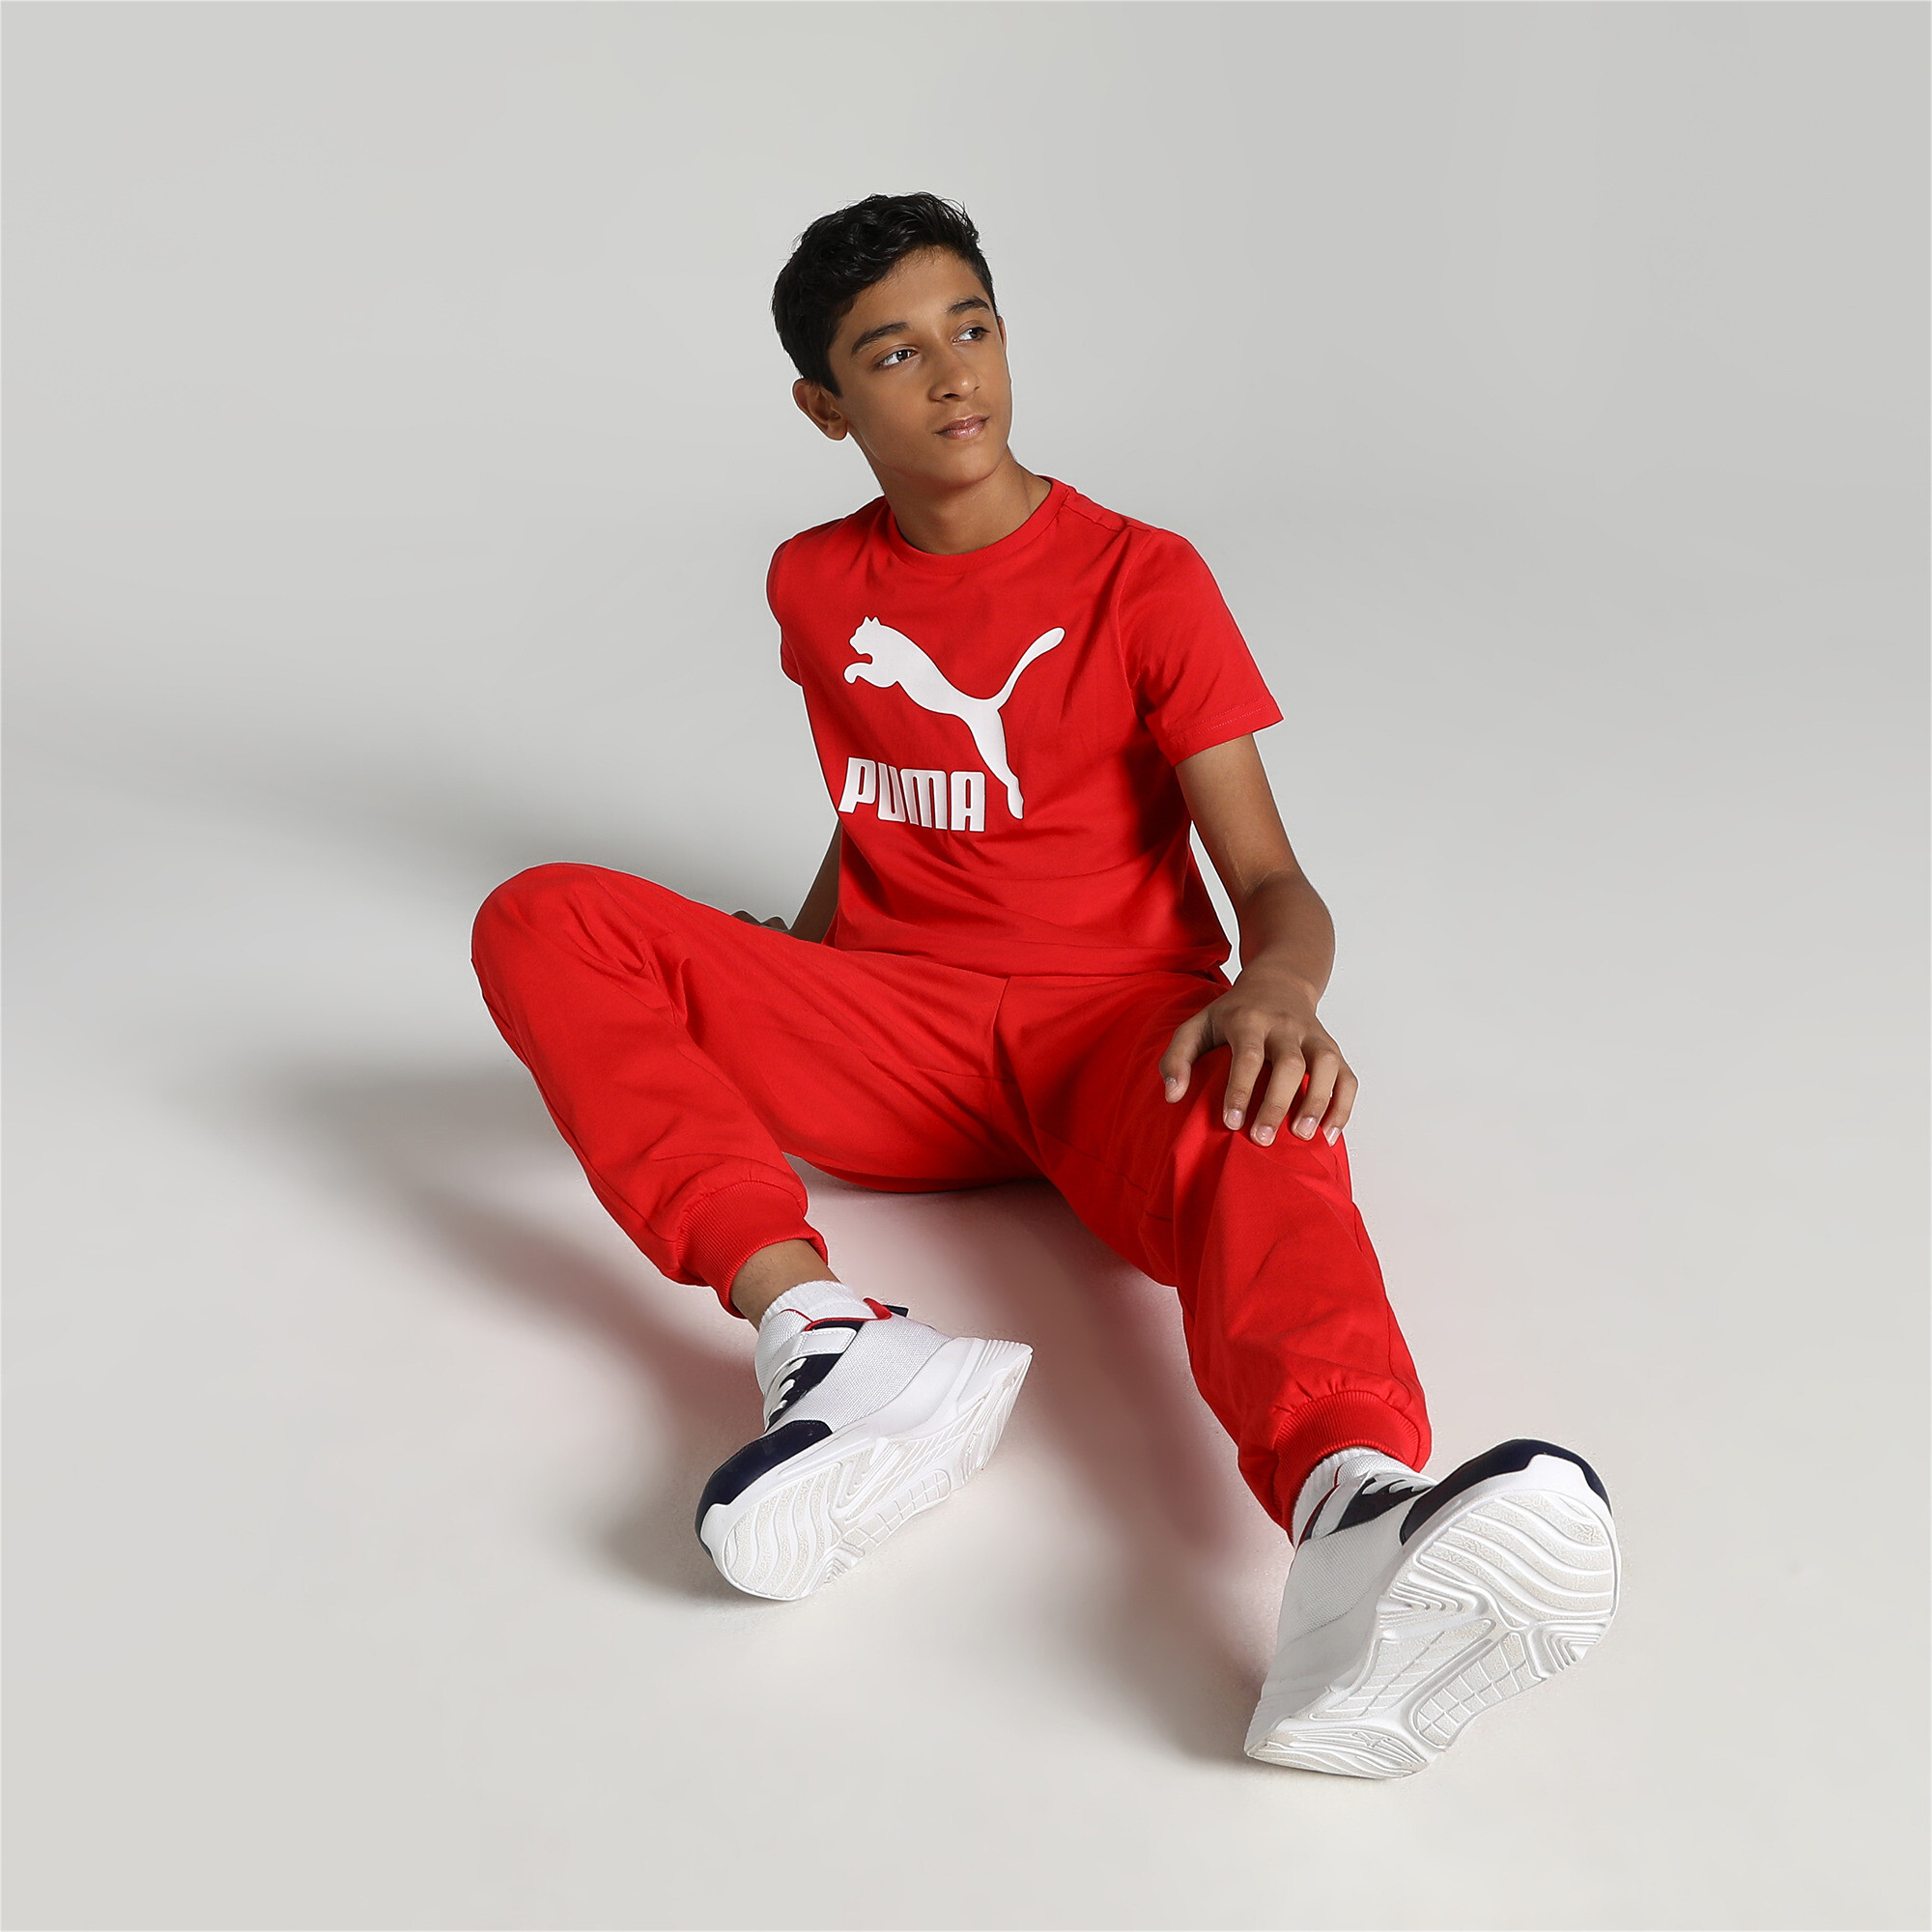 Men's Puma Classics B Youth T-Shirt, Red, Size 7-8Y, Clothing